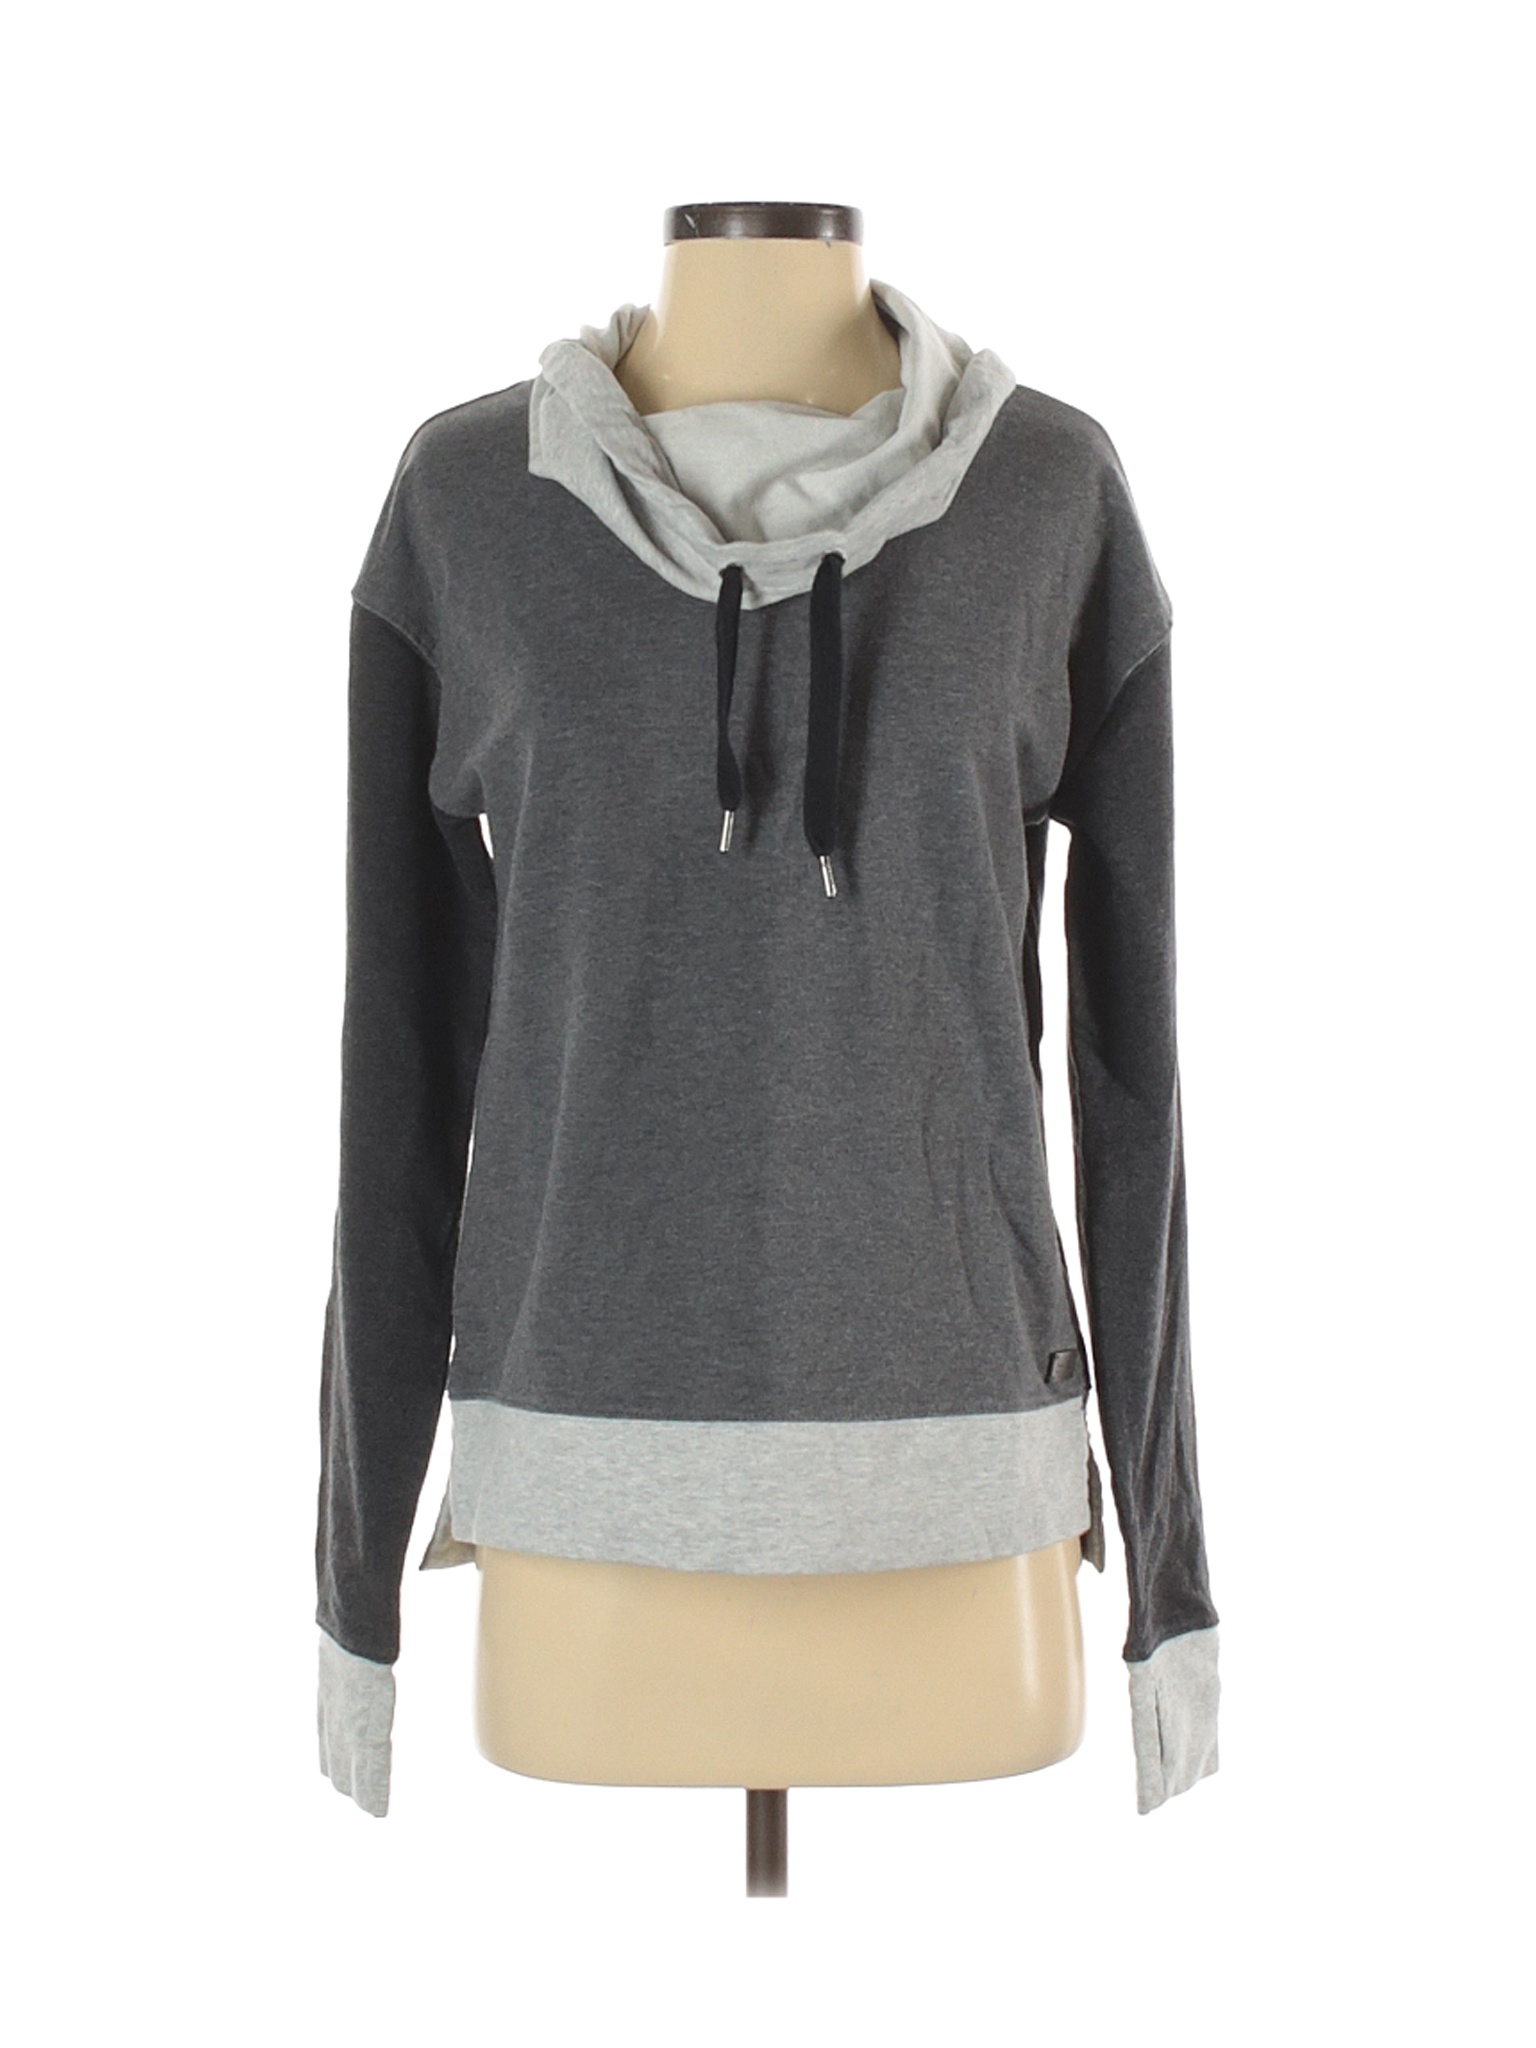 Nicole Miller New York Women Gray Sweatshirt S | eBay